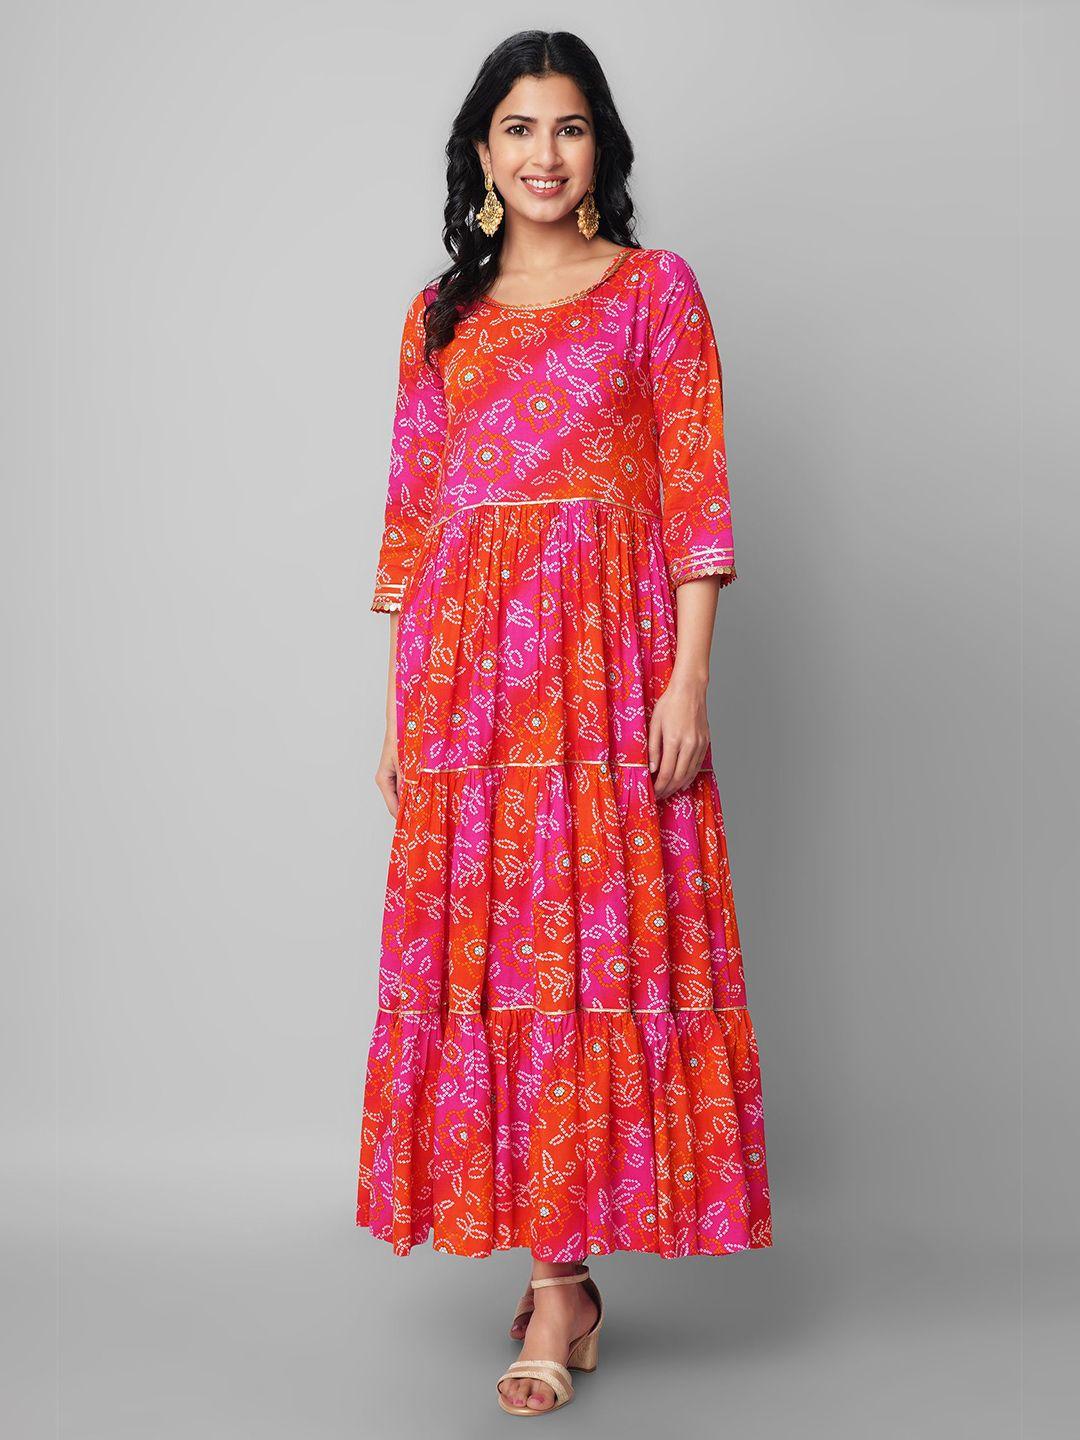 god bless multicoloured ethnic motifs maxi dress